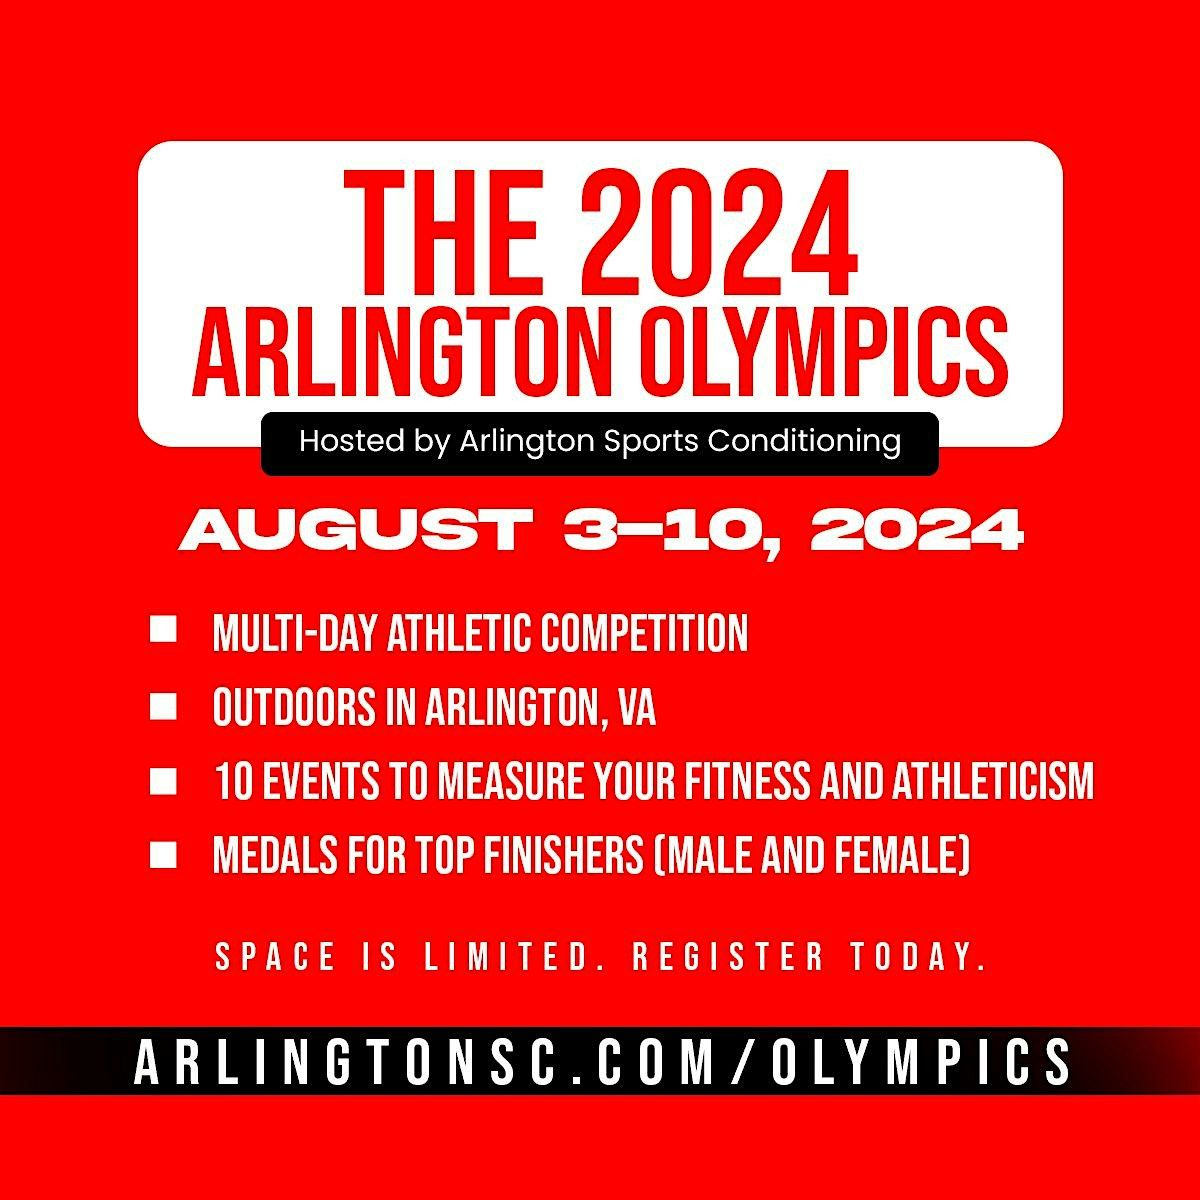 The 2024 Arlington Olympics: Day 2 of 5 (Evening Option)